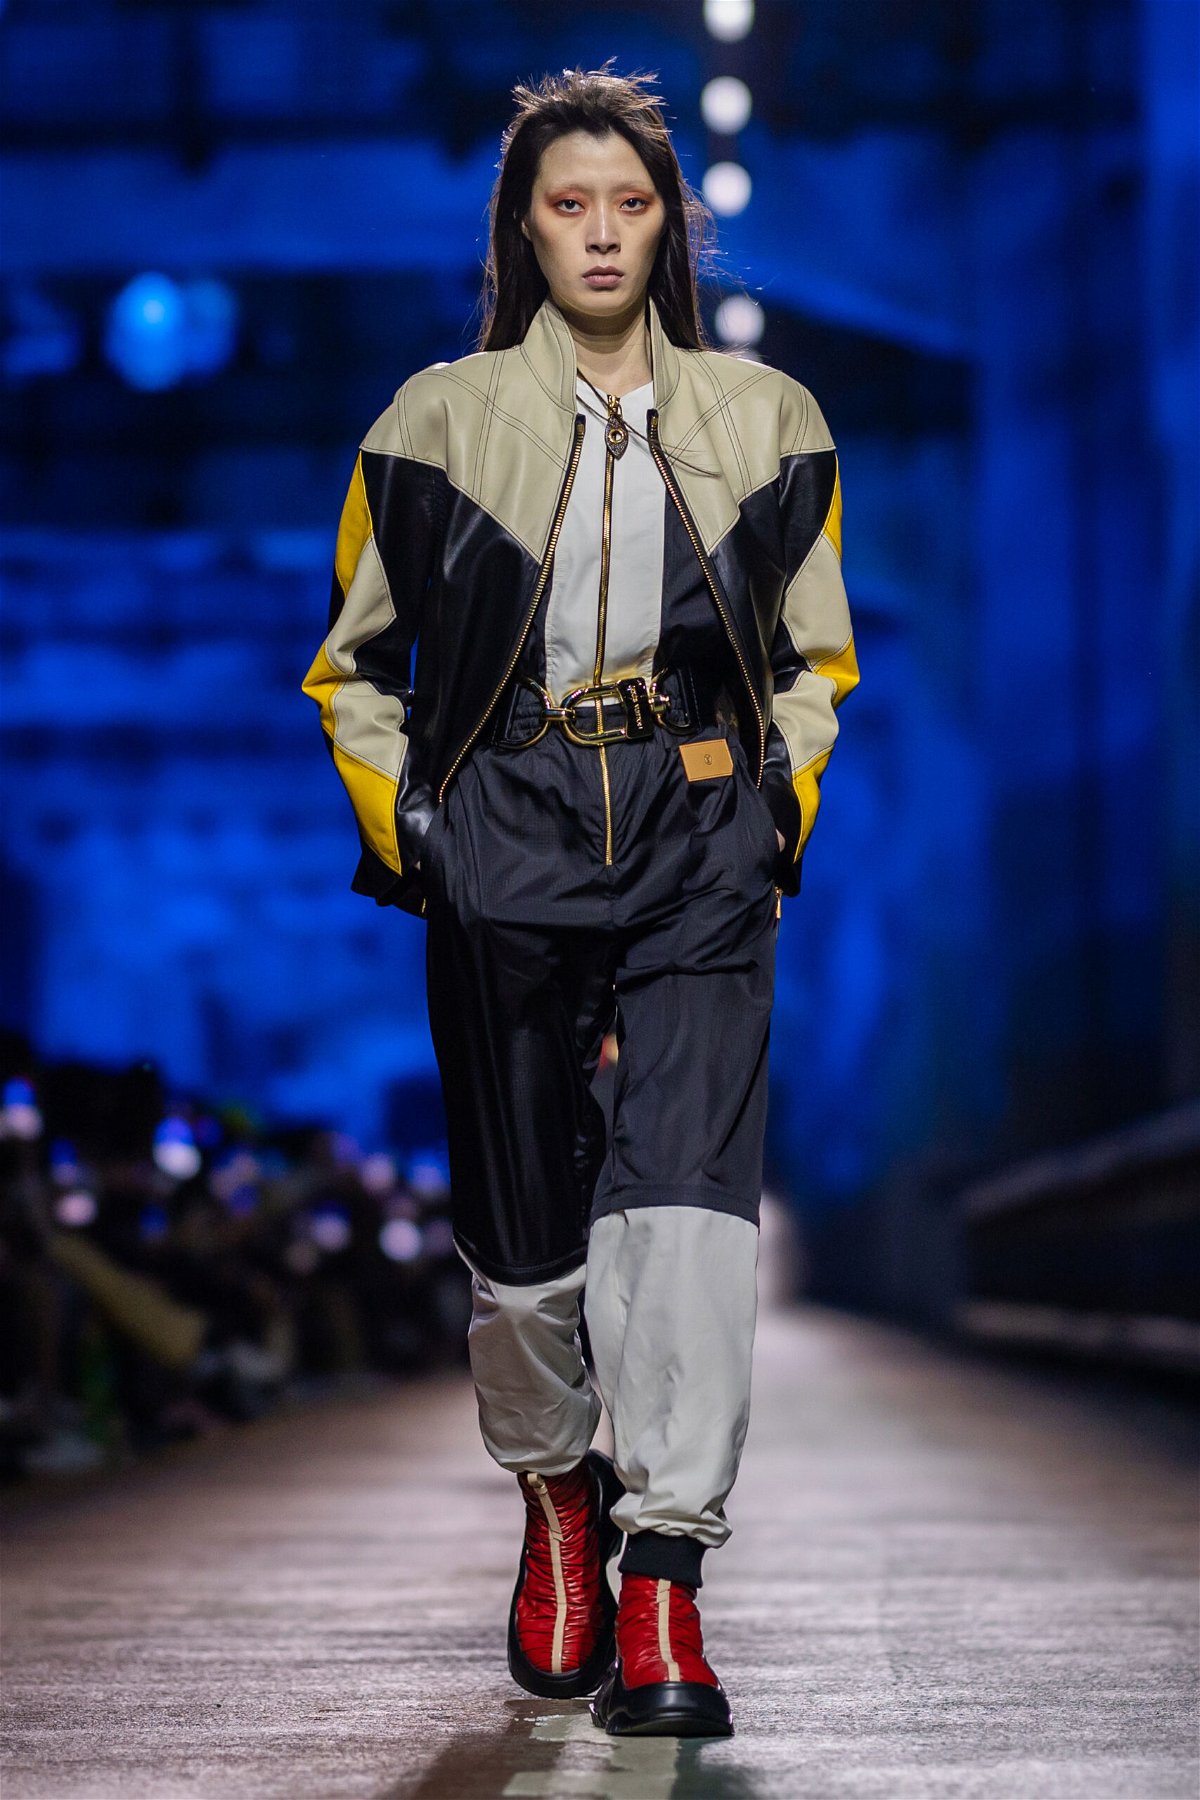 Dior appoints BTS star Jimin as a global brand ambassador - KTVZ